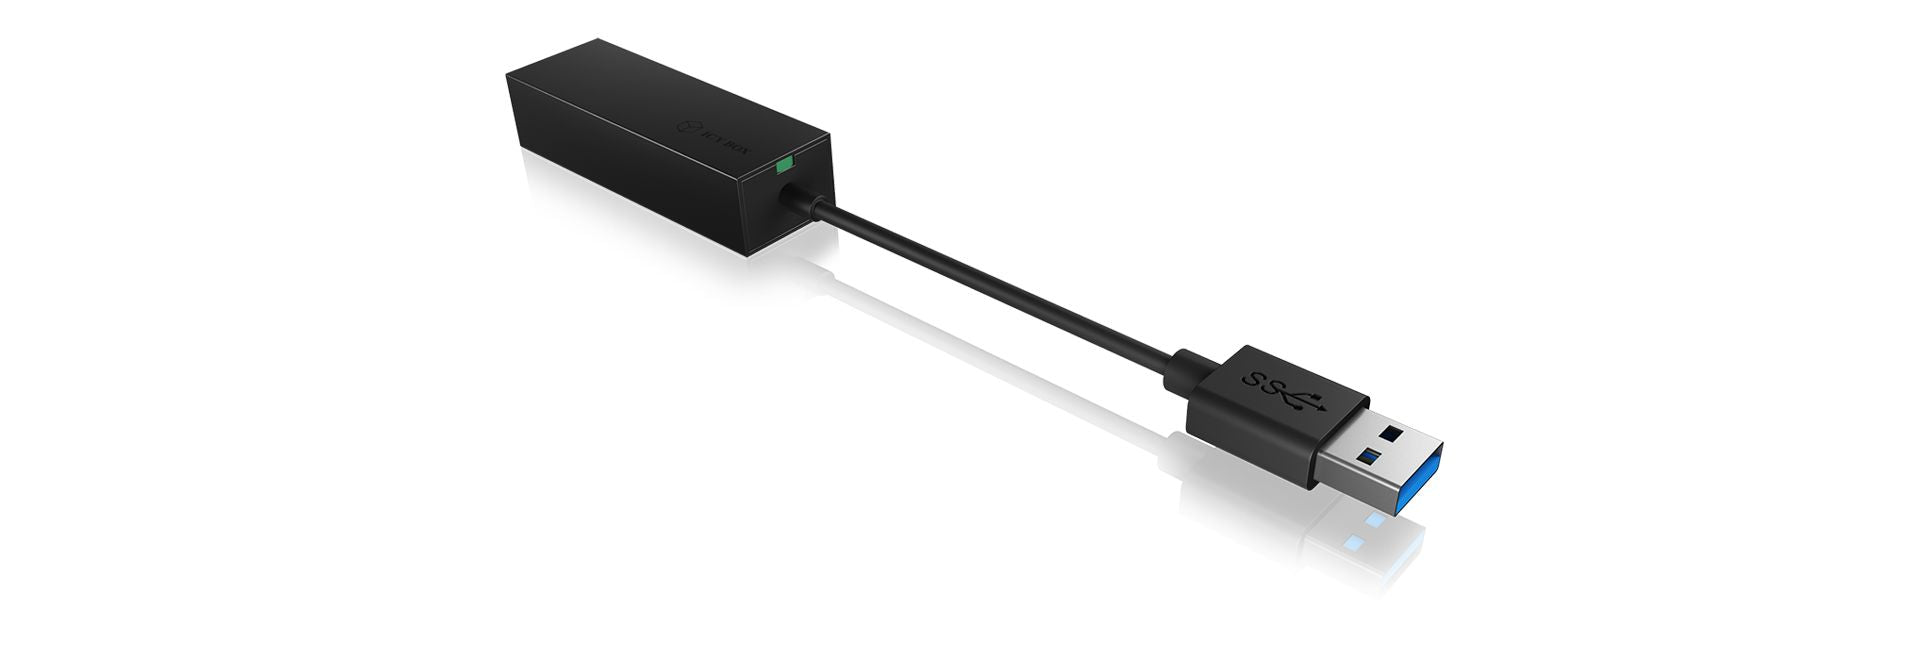 Raidsonic IcyBox IB-AC501a USB 3.0 to Gigabit Ethernet Adapter Black-0